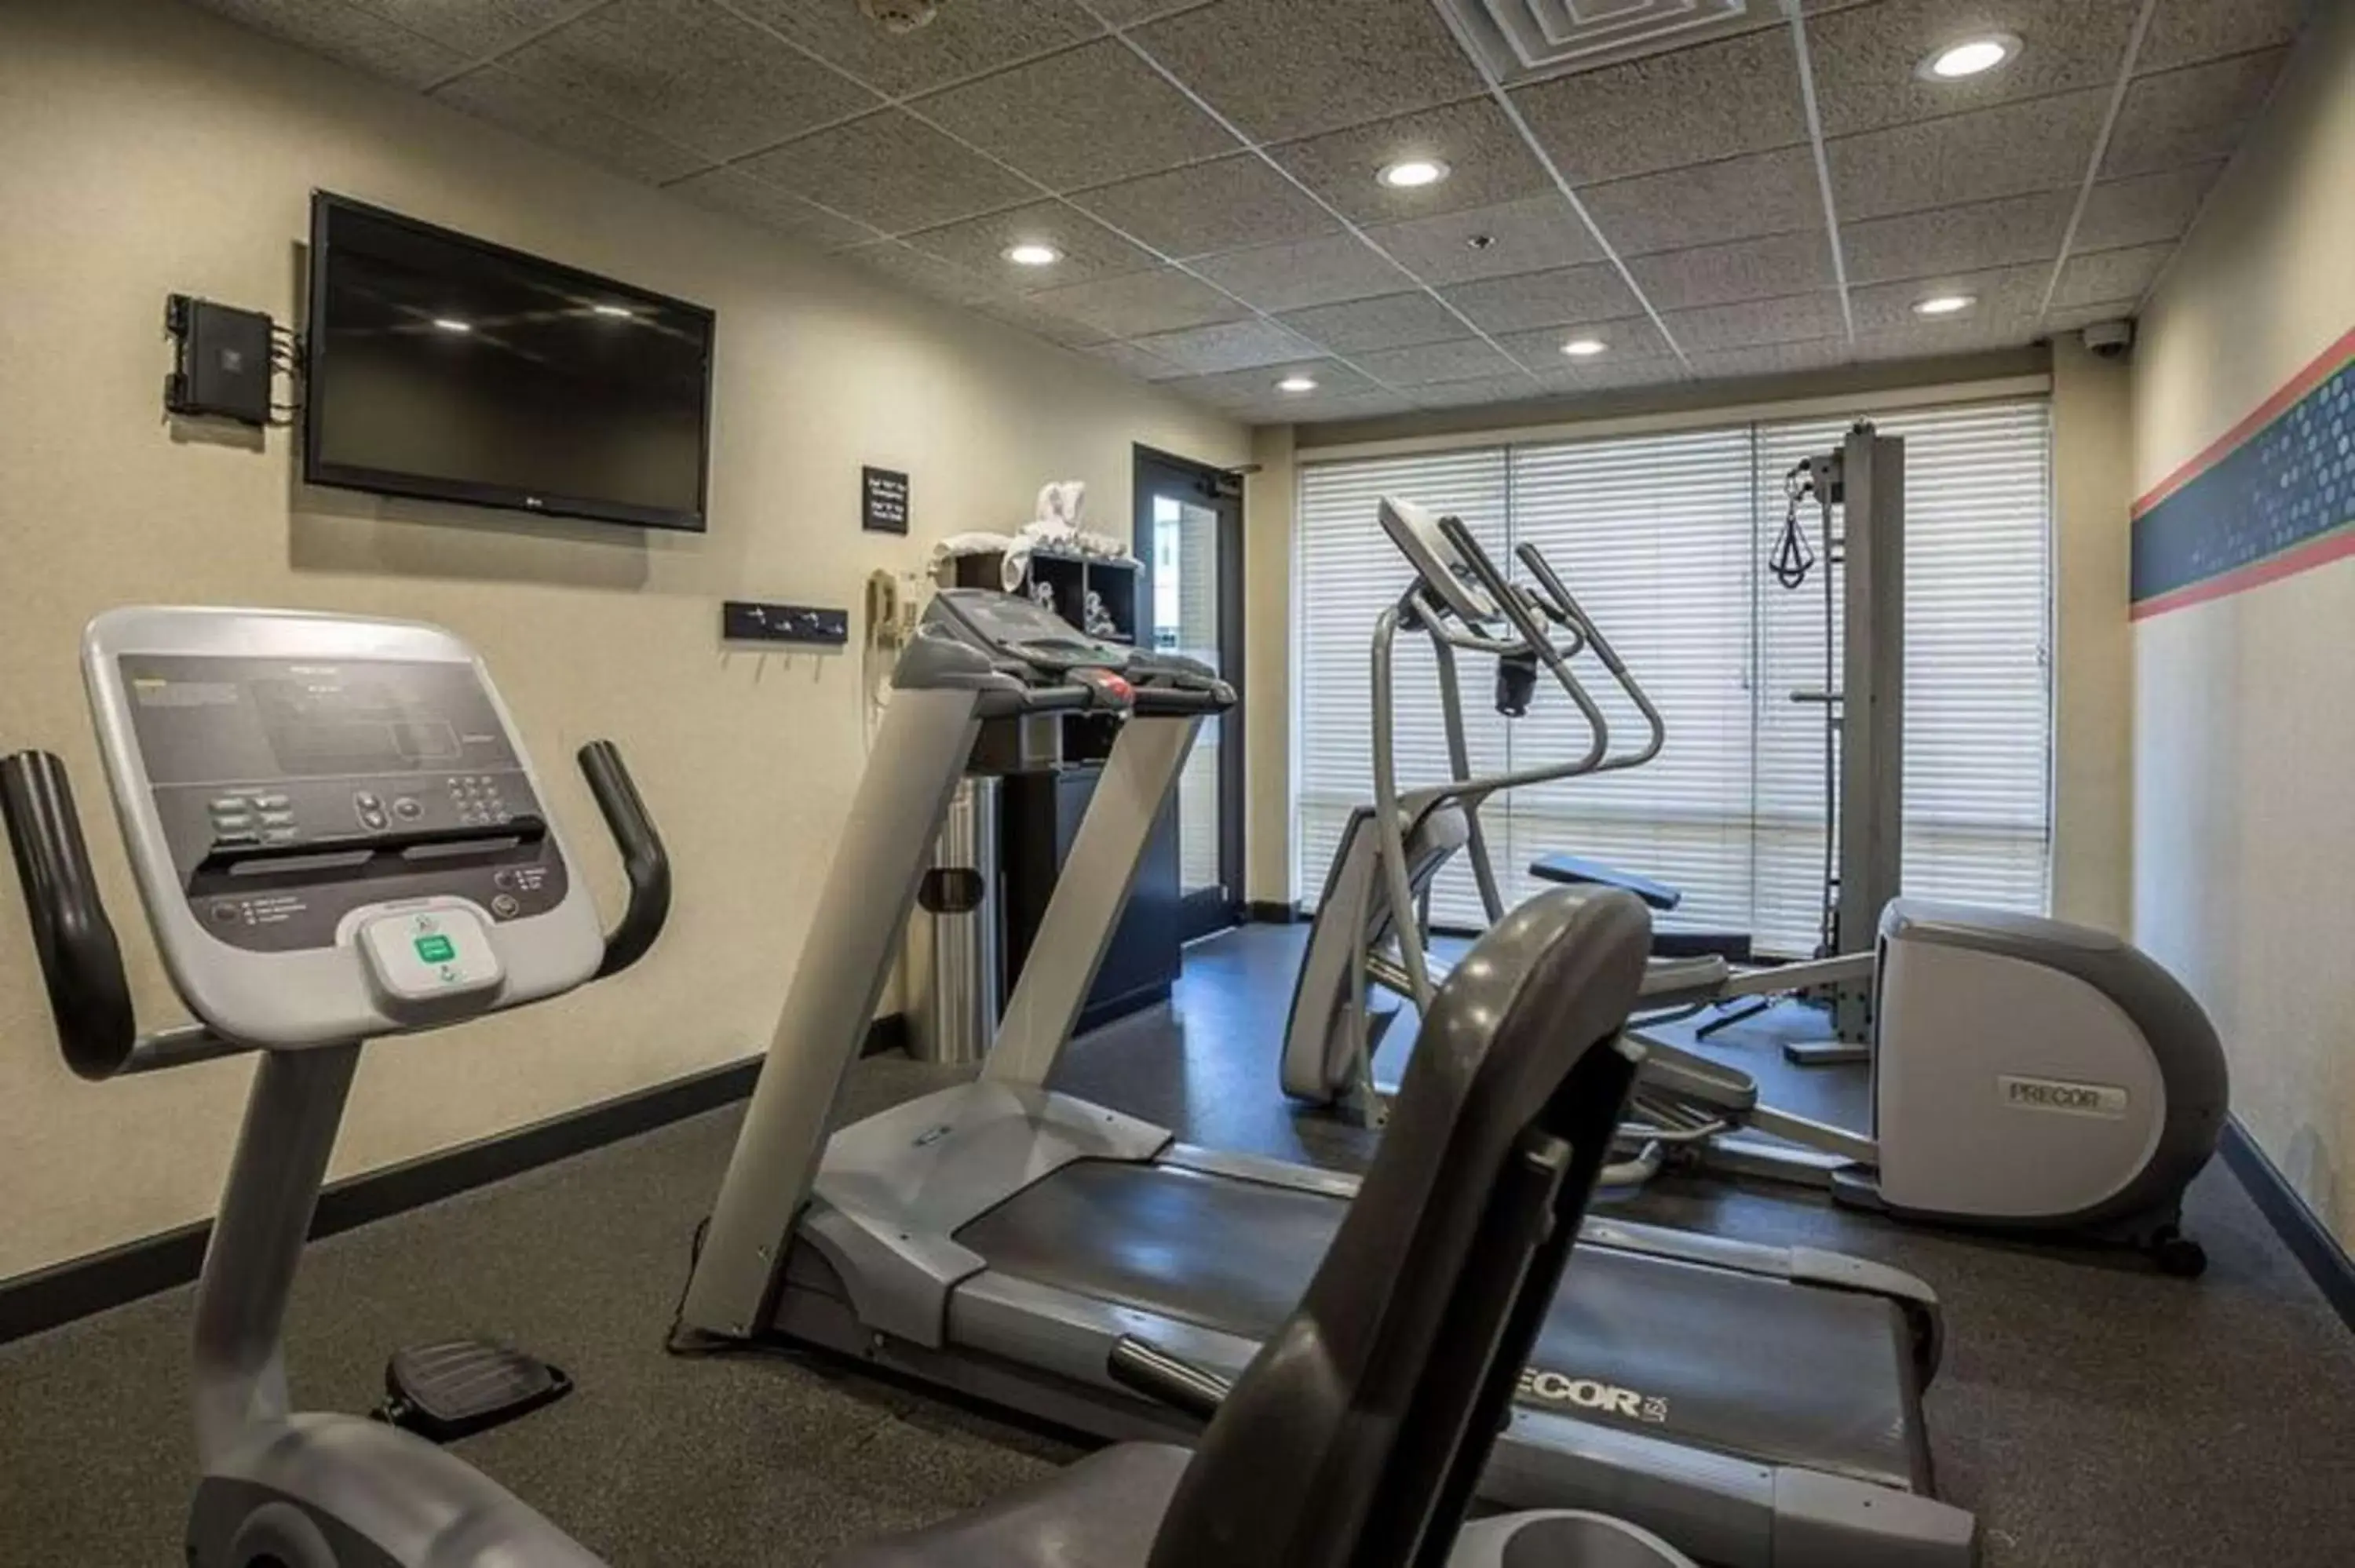 Fitness centre/facilities, Fitness Center/Facilities in Hampton Inn Somerset